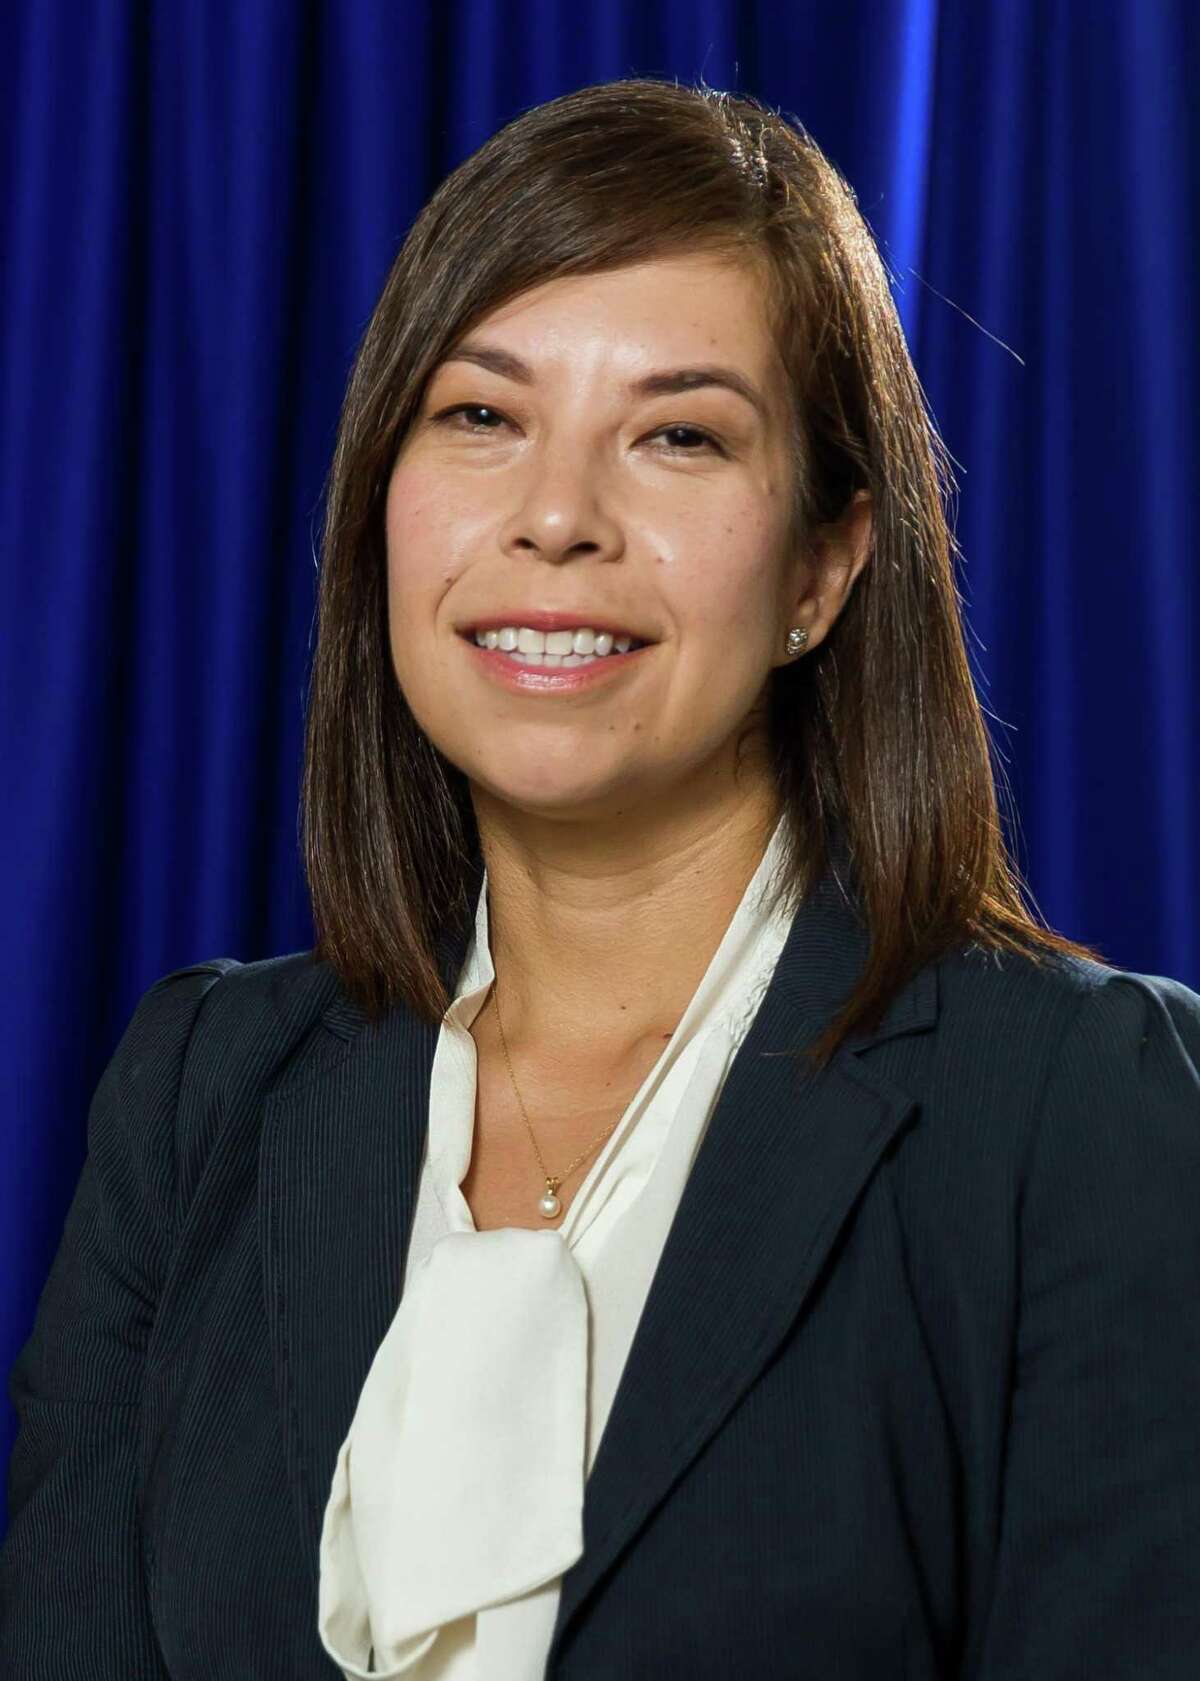 San Antonio lawyer Christine Hortick is the Democratic nominee for Precinct 3 Bexar County commissioner.